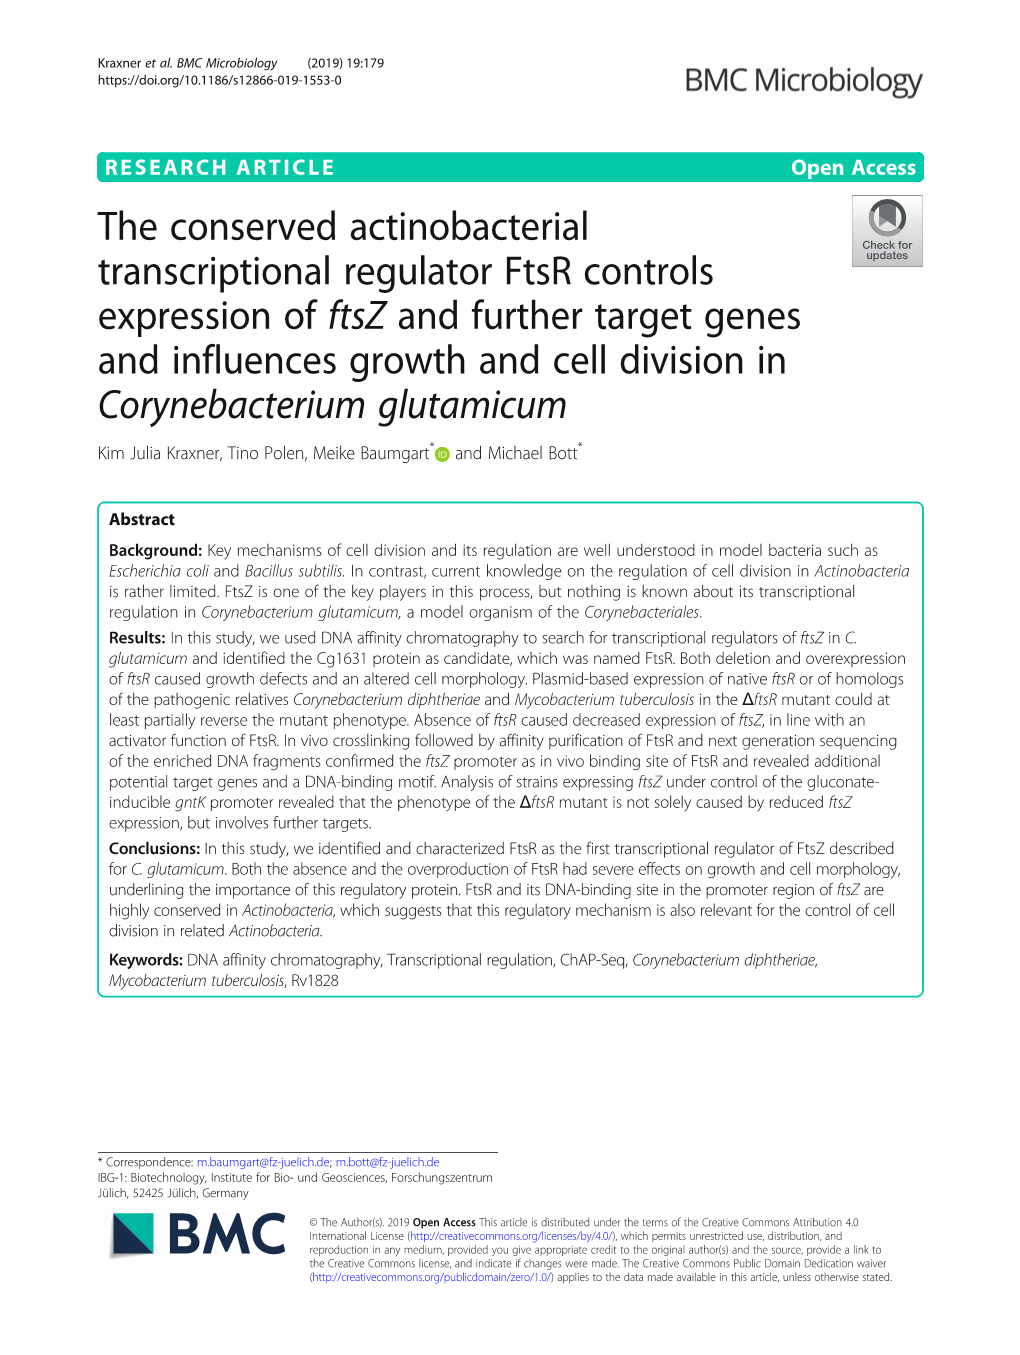 The Conserved Actinobacterial Transcriptional Regulator Ftsr